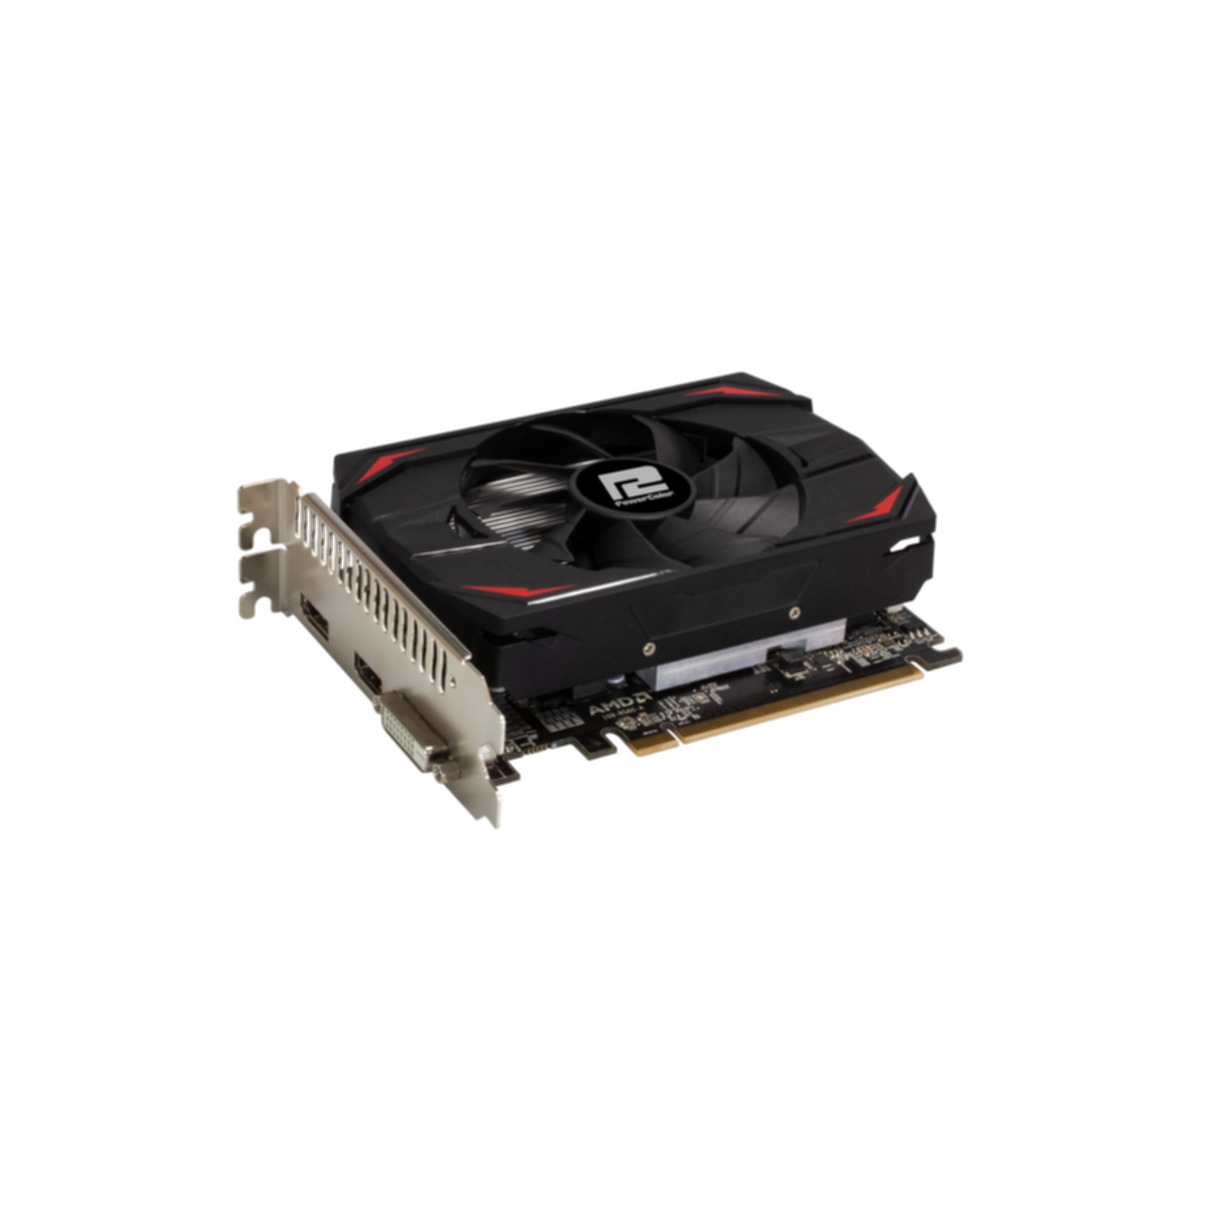 Grafikkarte) Red (AMD, Dragon RX POWERCOLOR 550 4GB